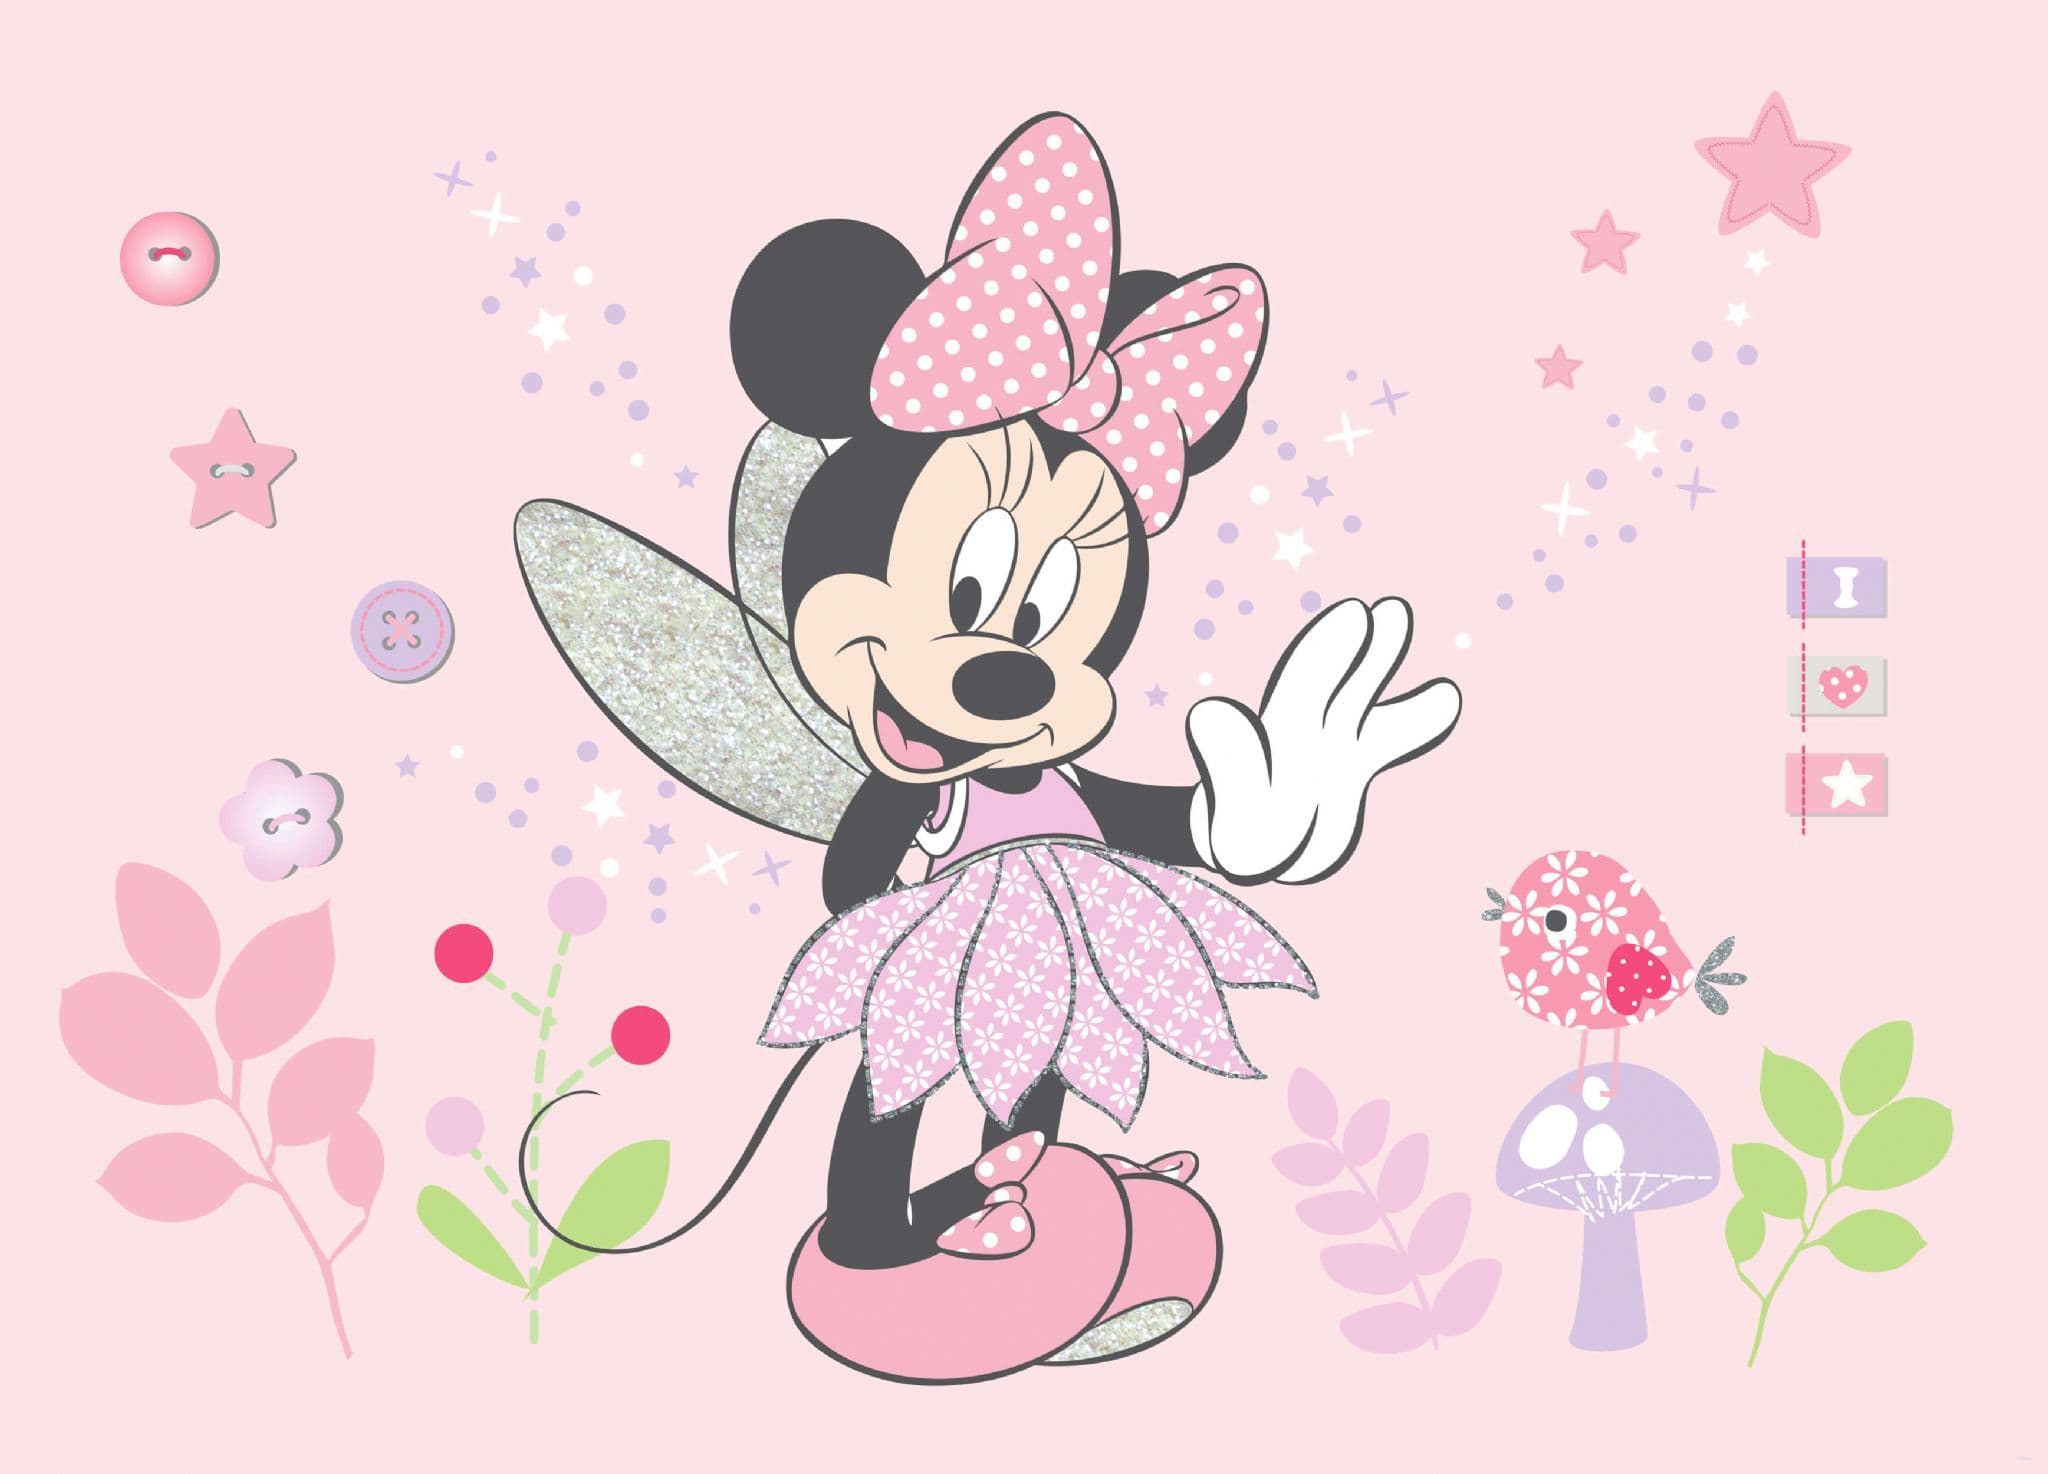  Minnie Mouse Hintergrundbild 2048x1474. Minnie Mouse Small Premium wall murals. Buy it now